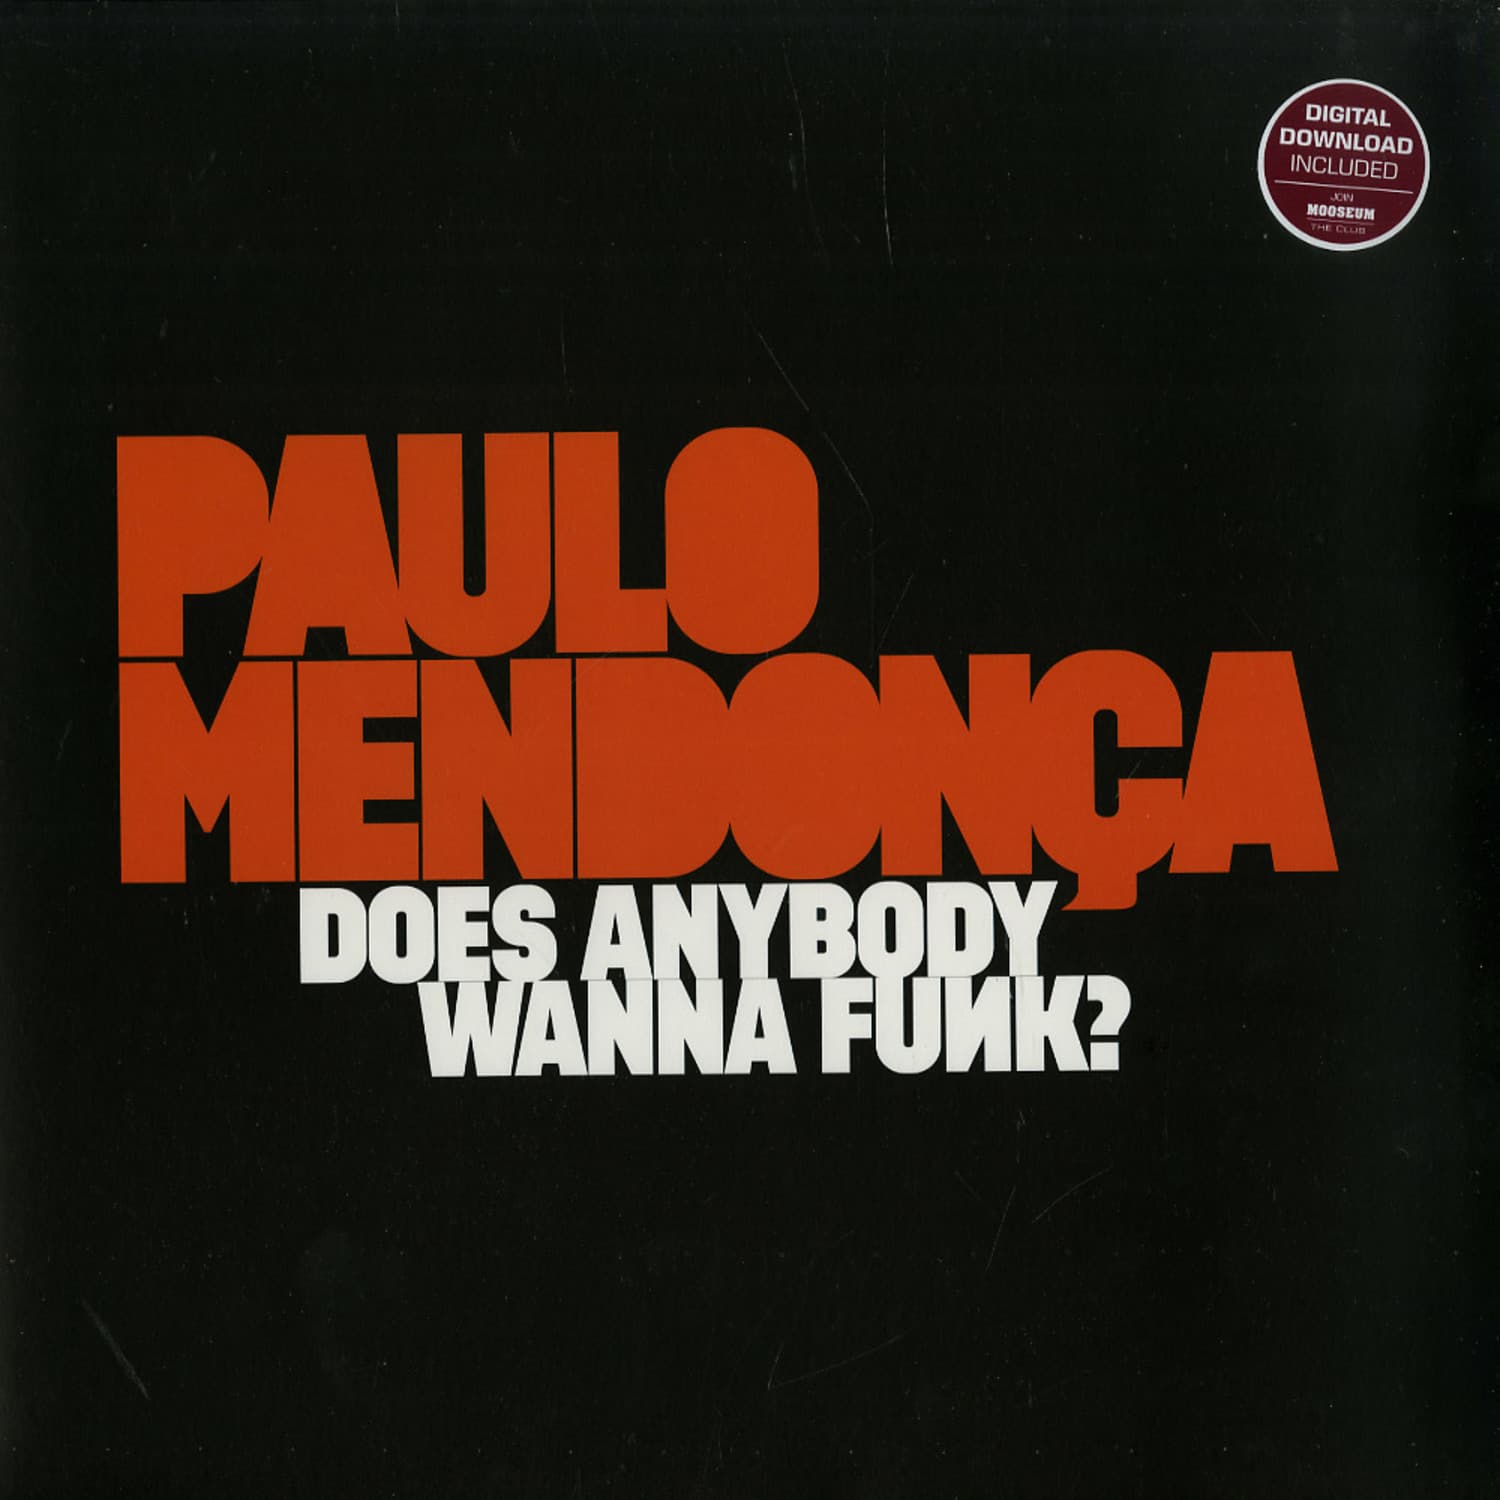 Paulo Mendonca - DOES ANYBODY WANNA FUNK? 